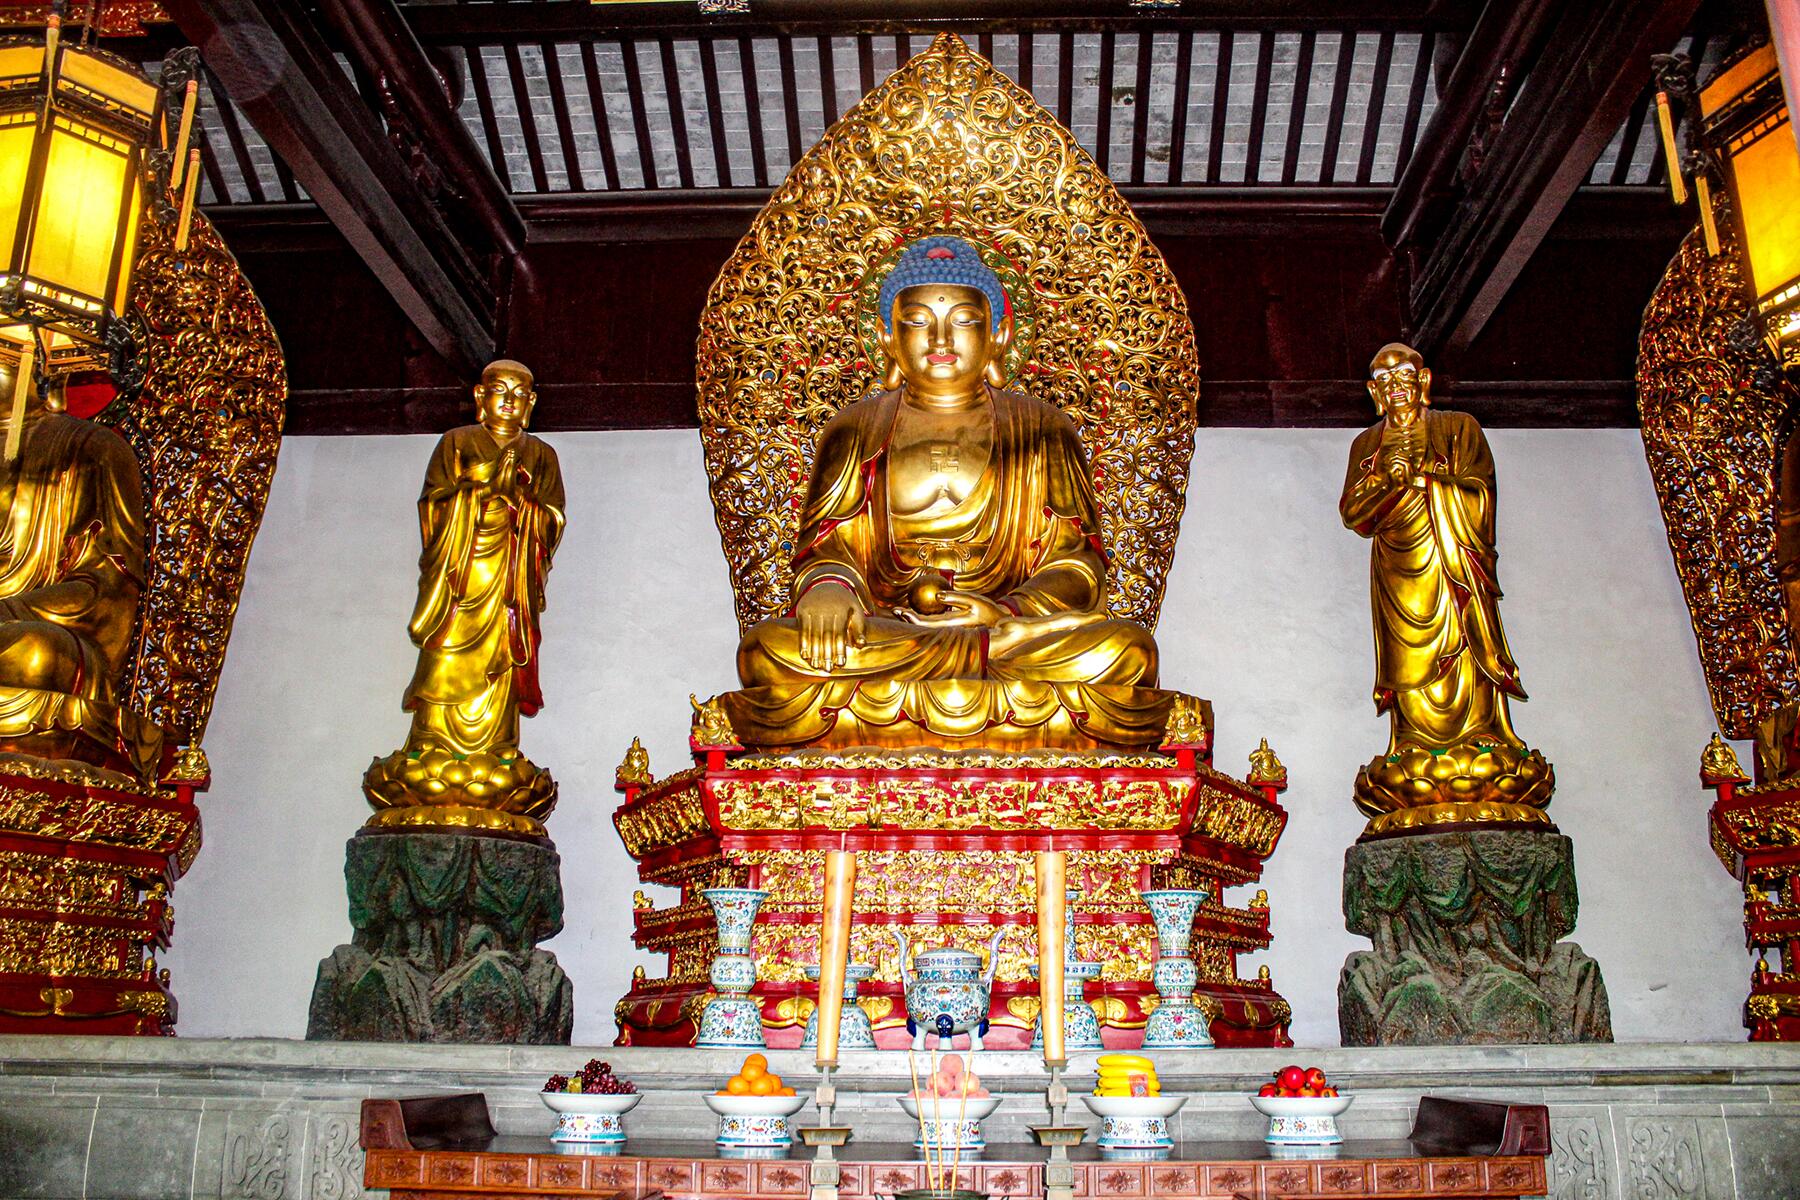 photo 4 - credit Dana Givens - buddha statue suzhou